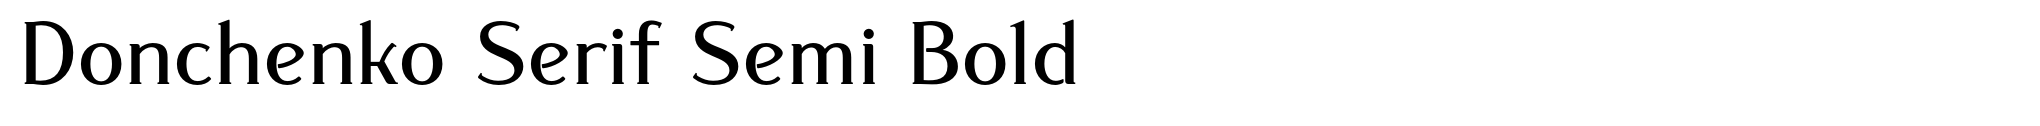 Donchenko Serif Semi Bold image